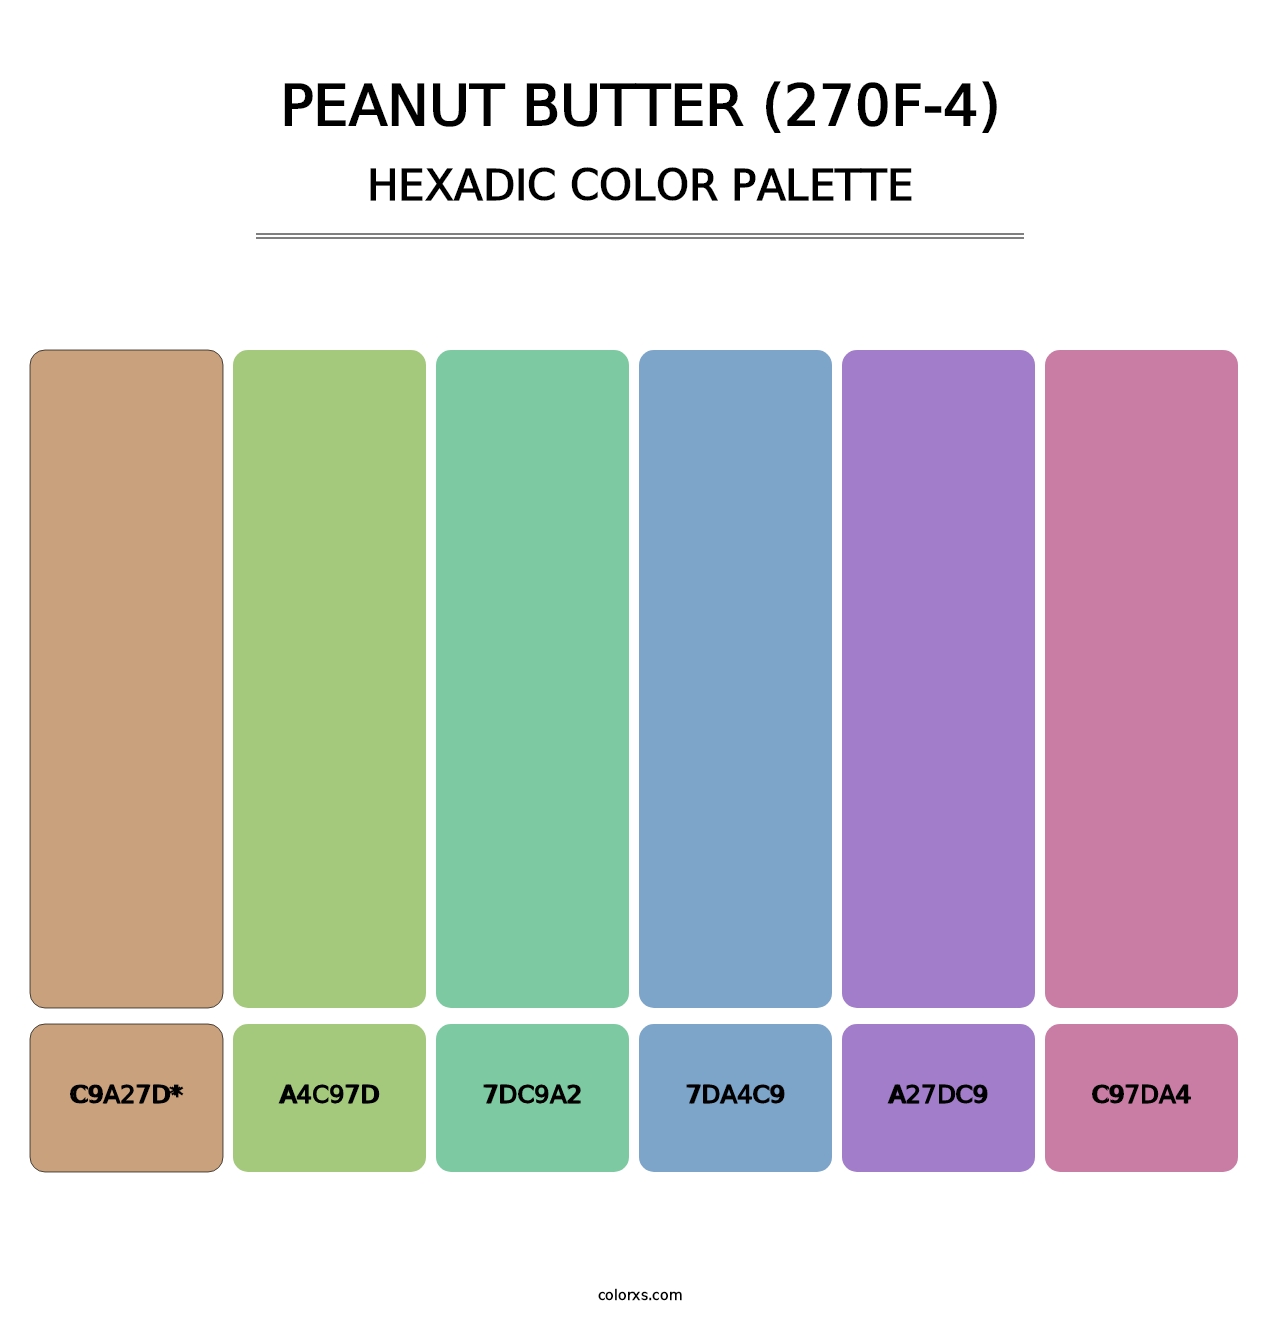 Peanut Butter (270F-4) - Hexadic Color Palette